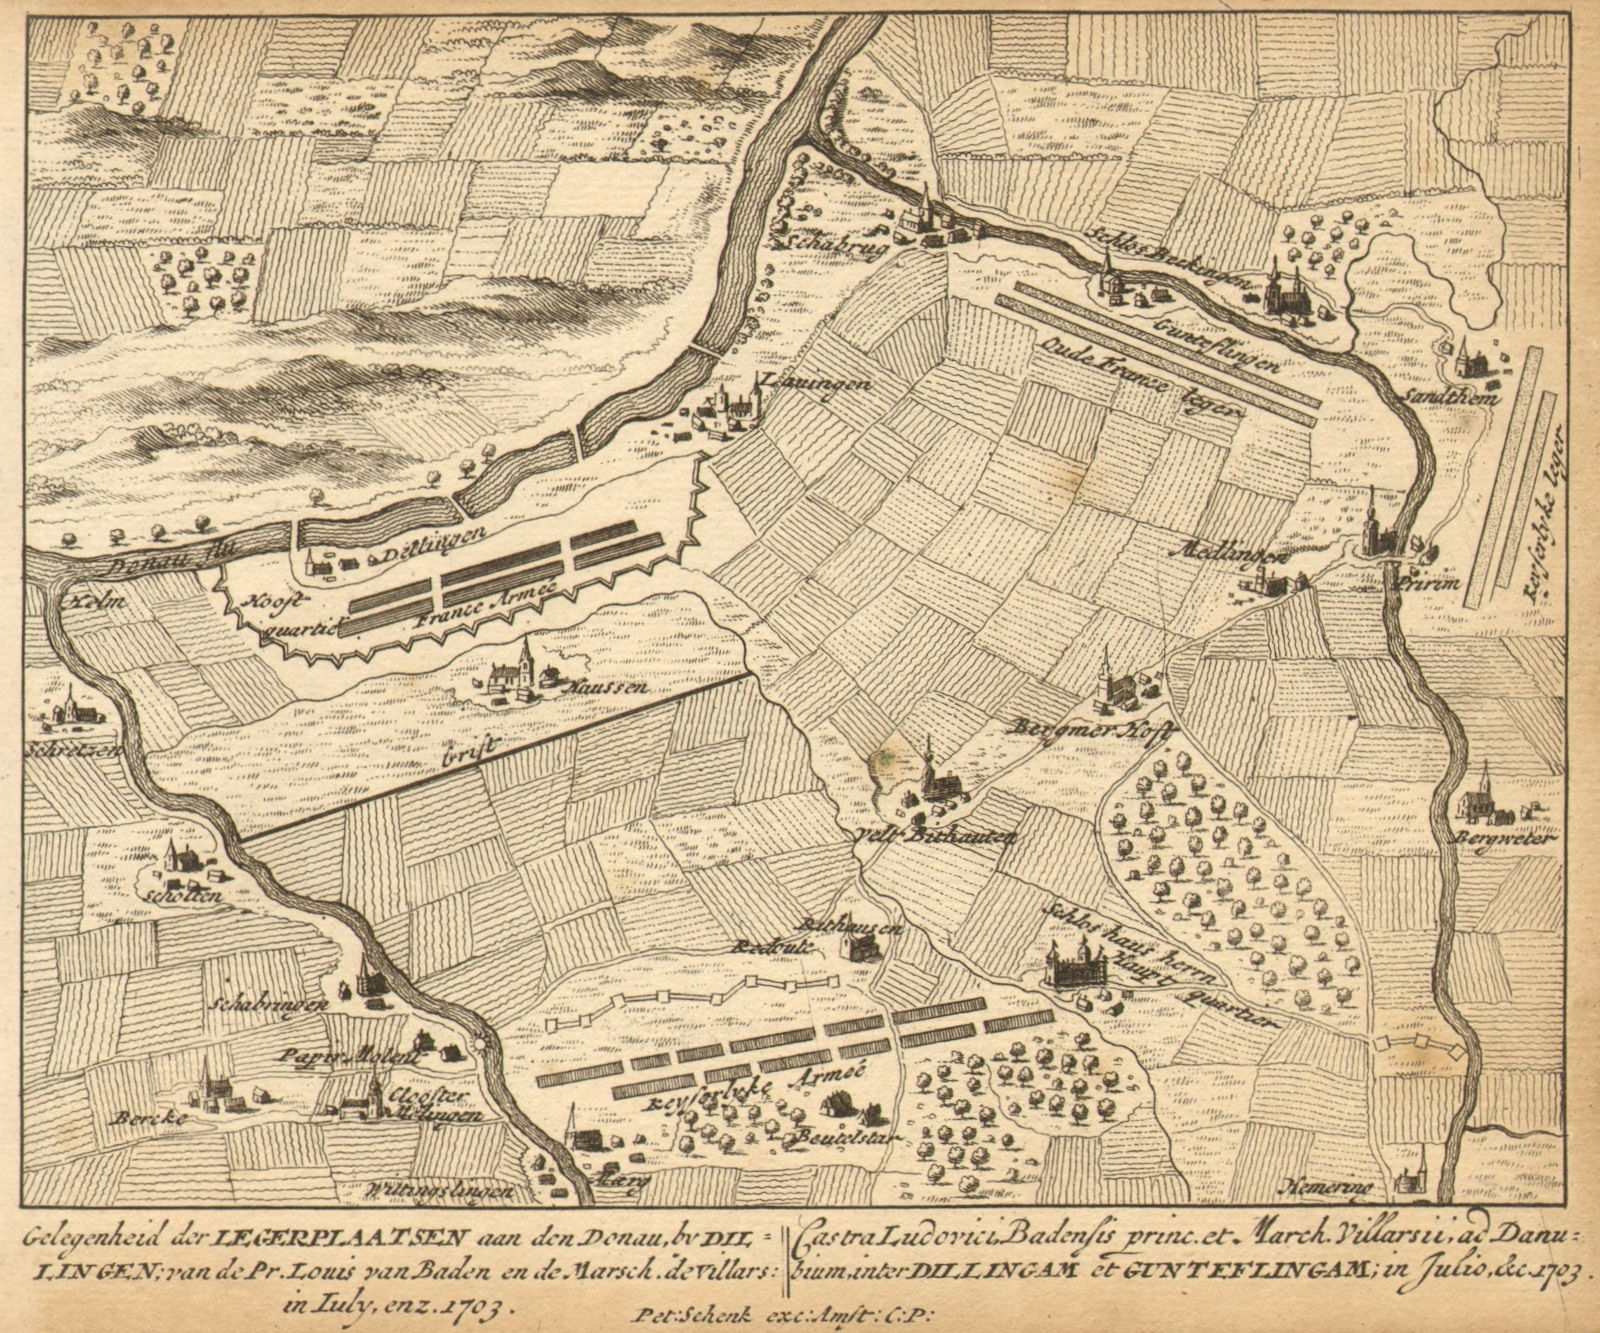 Associate Product DILLINGEN LEGERPLAATS. Schenk town plan.Germany 1710 old antique map chart